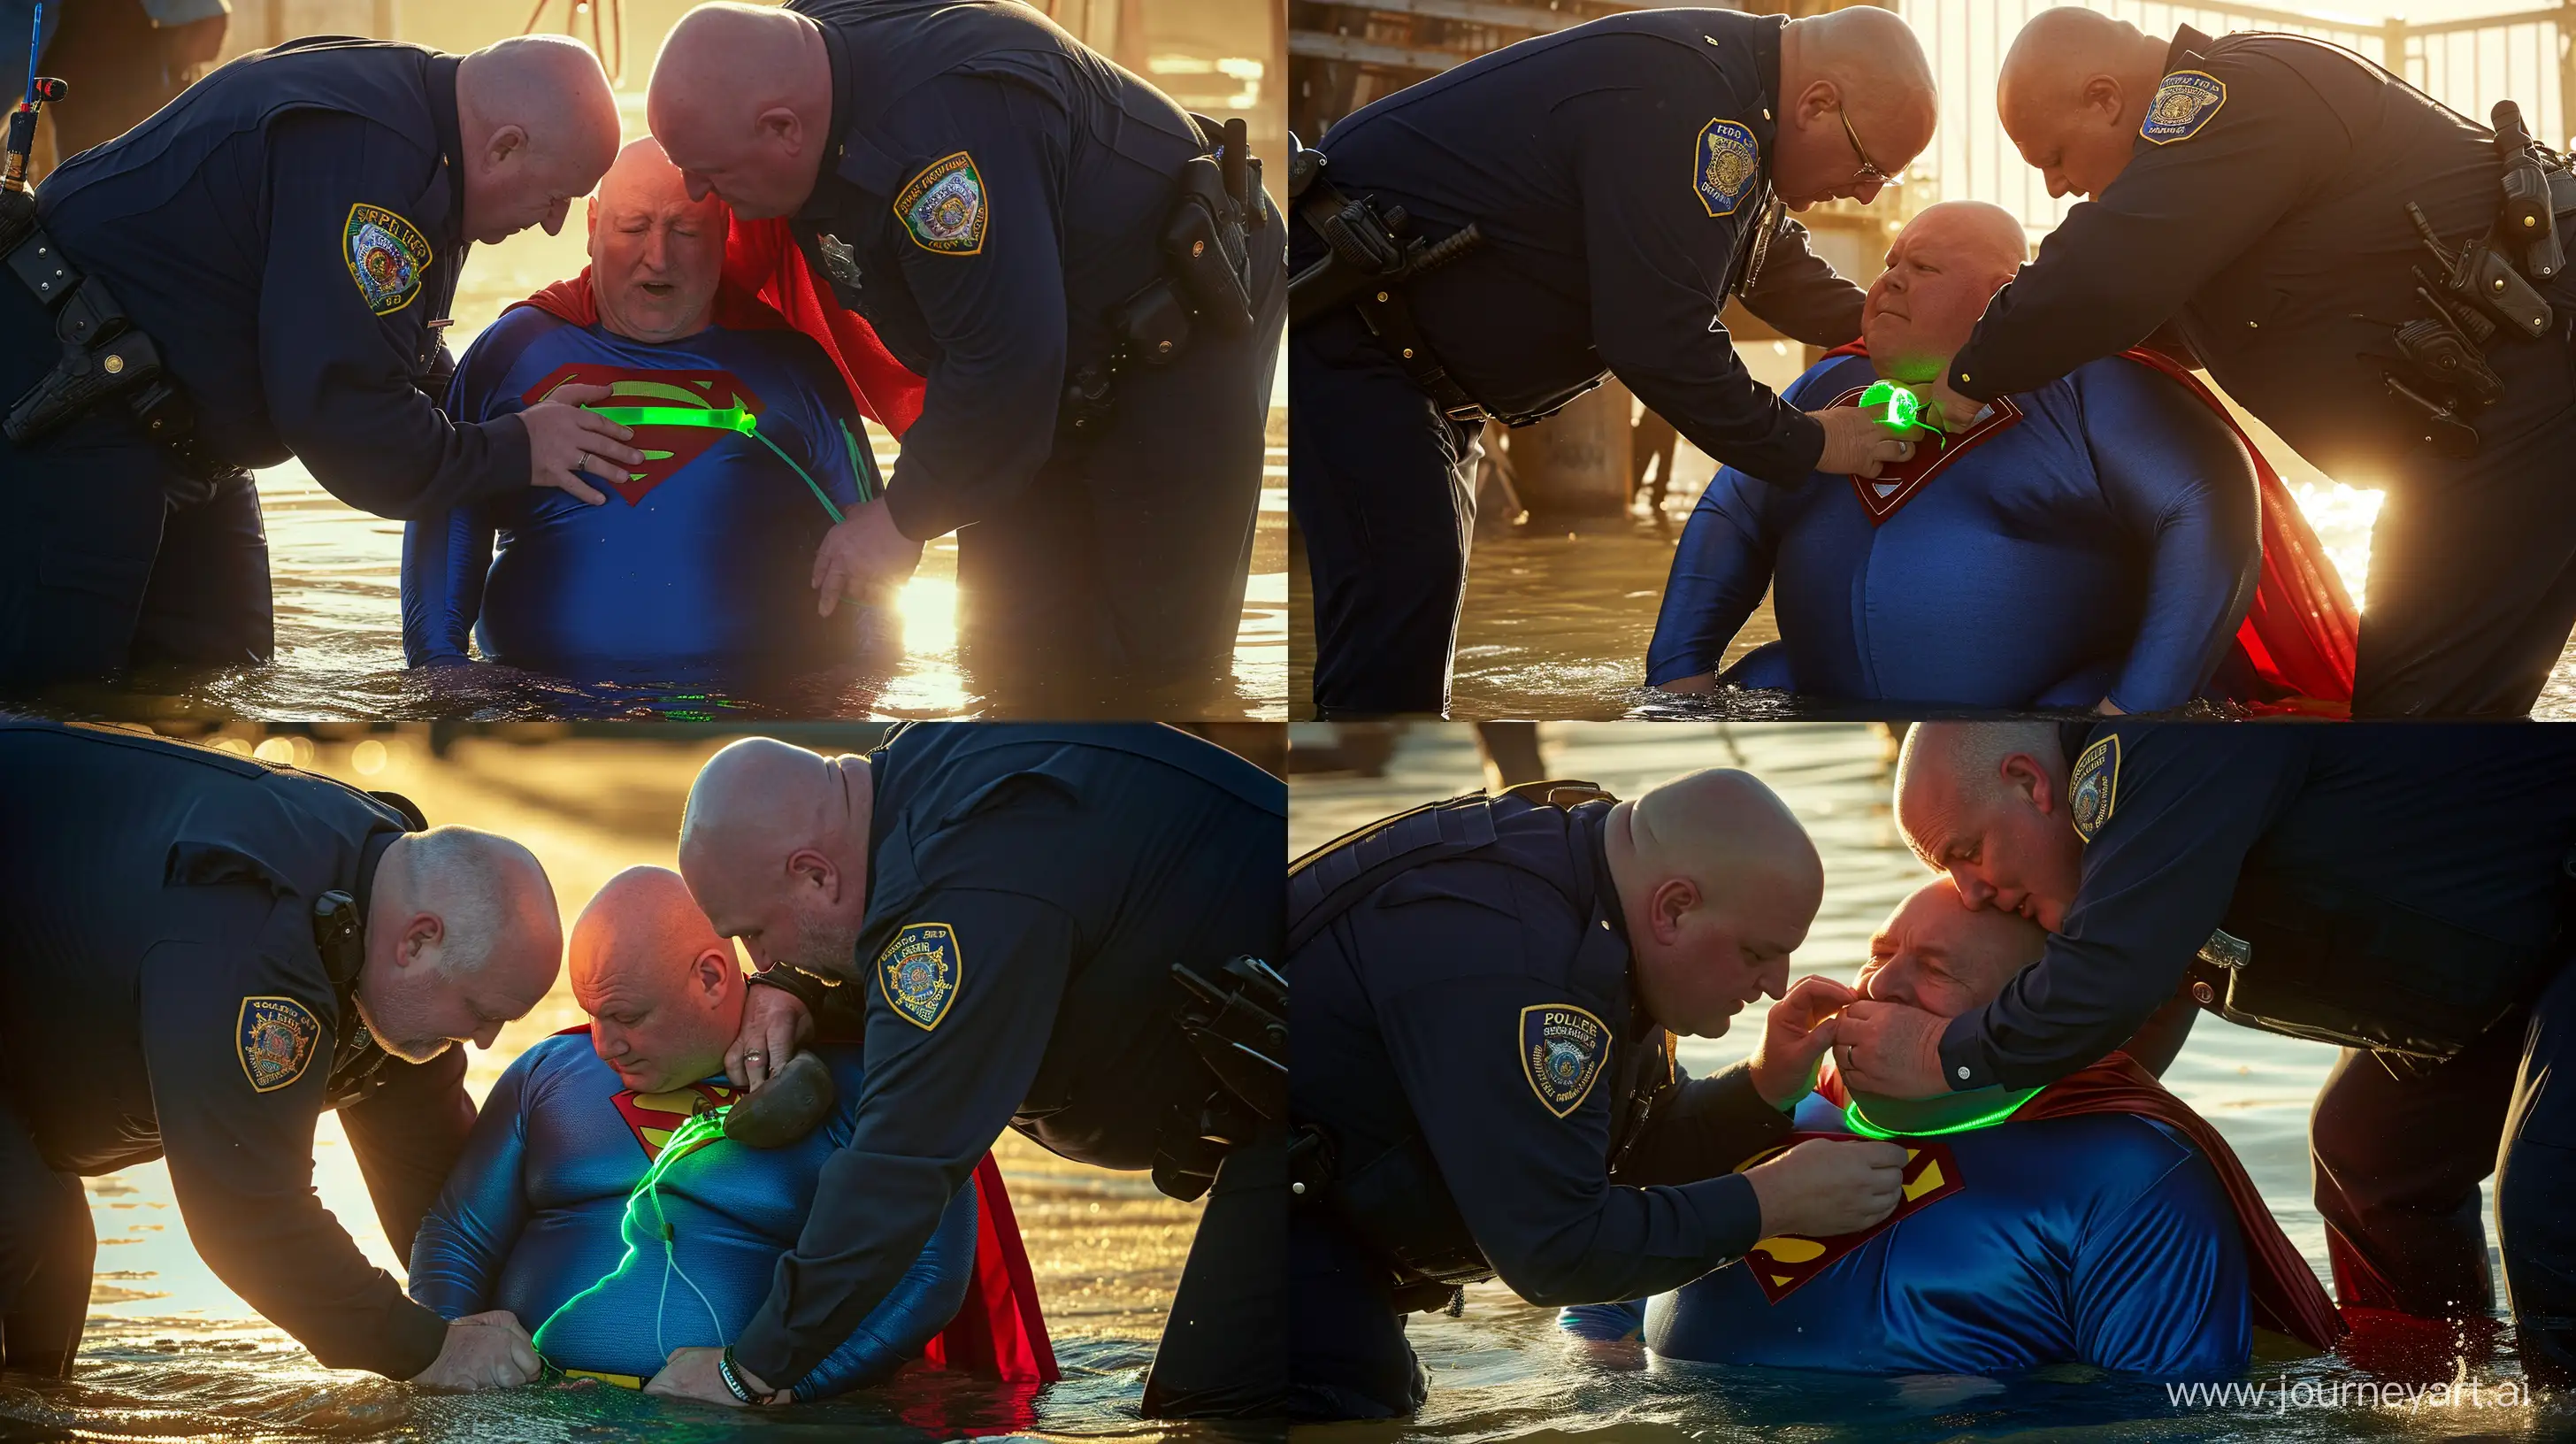 Elderly-Men-in-Police-Uniforms-Fastening-Glowing-Dog-Collar-on-Man-in-Superman-Costume